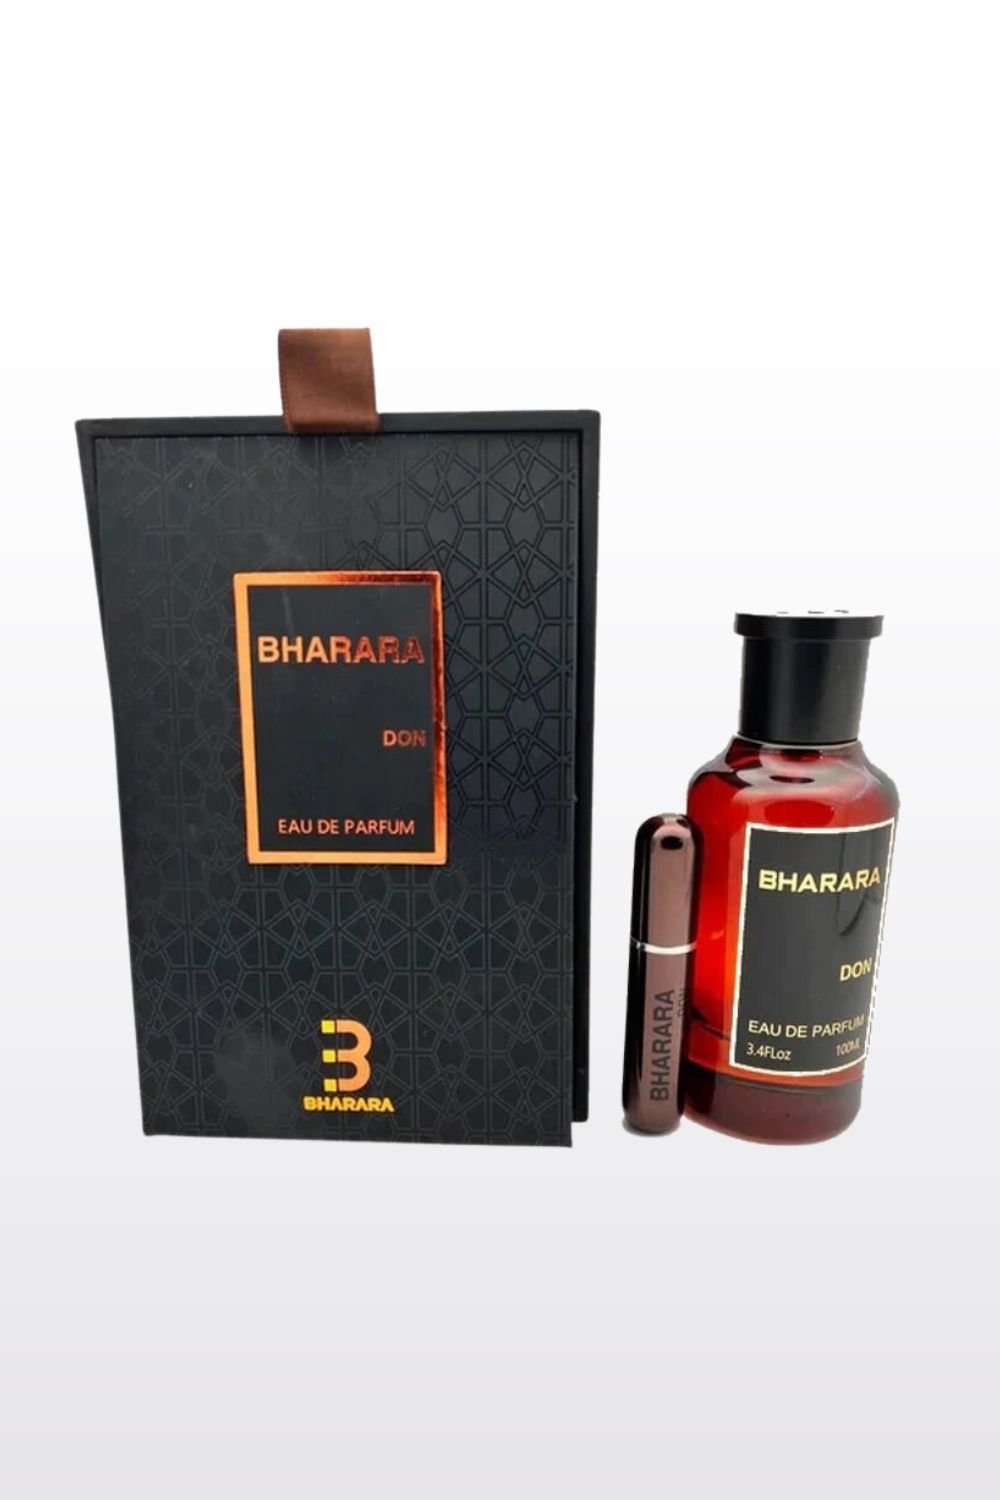 BHARARA - בהררה דון 100 מ"ל אדפ לגבר - MASHBIR//365